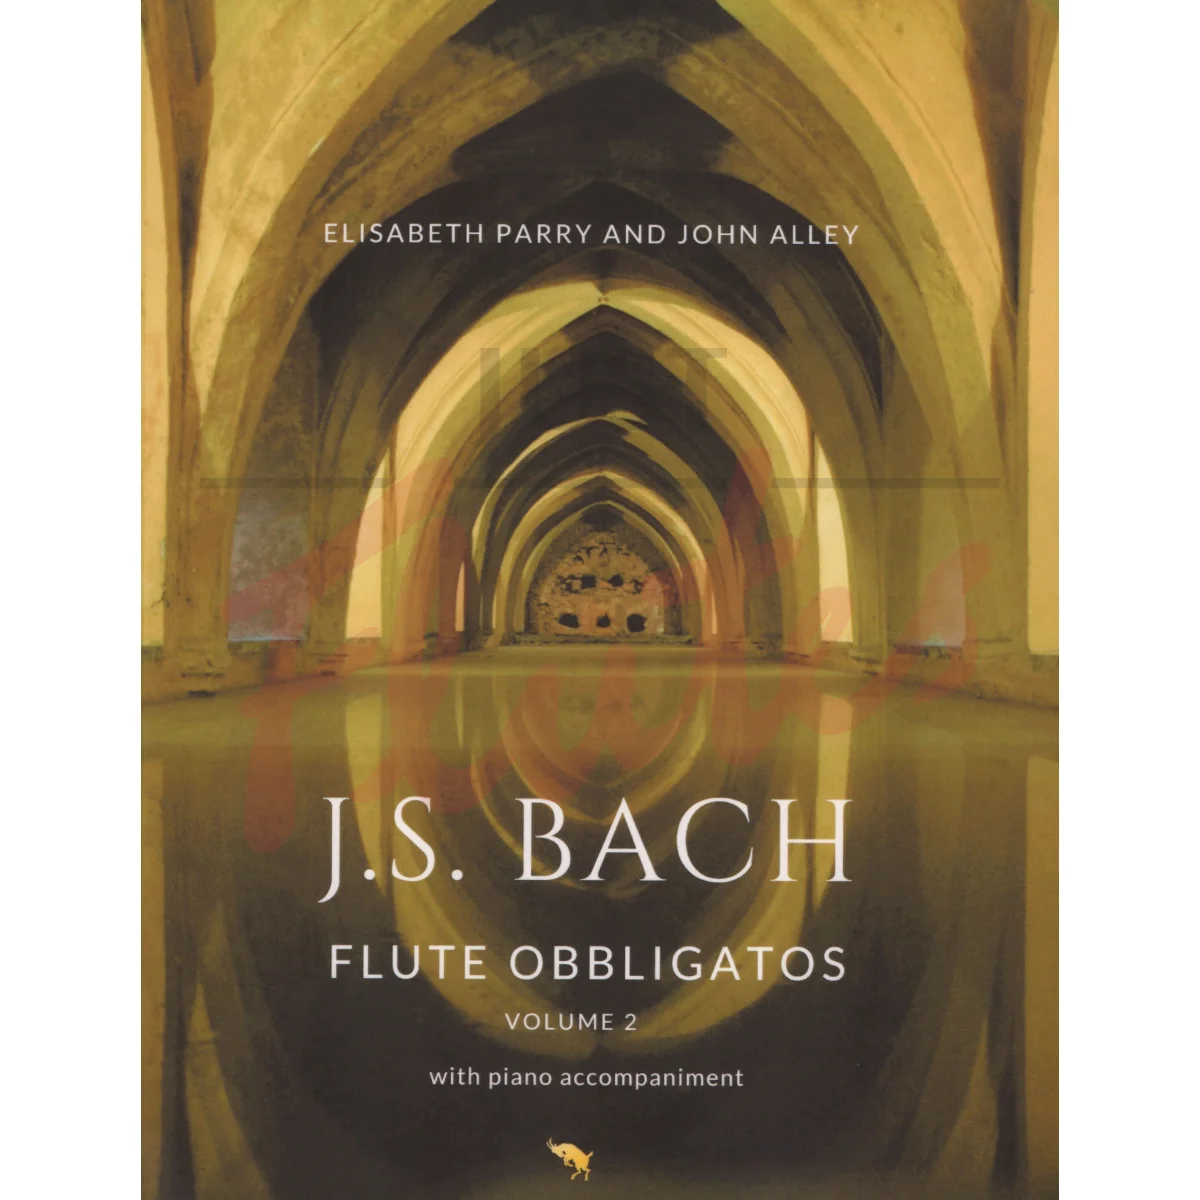 Flute Obbligatos with Piano Accompaniment, Volume 2